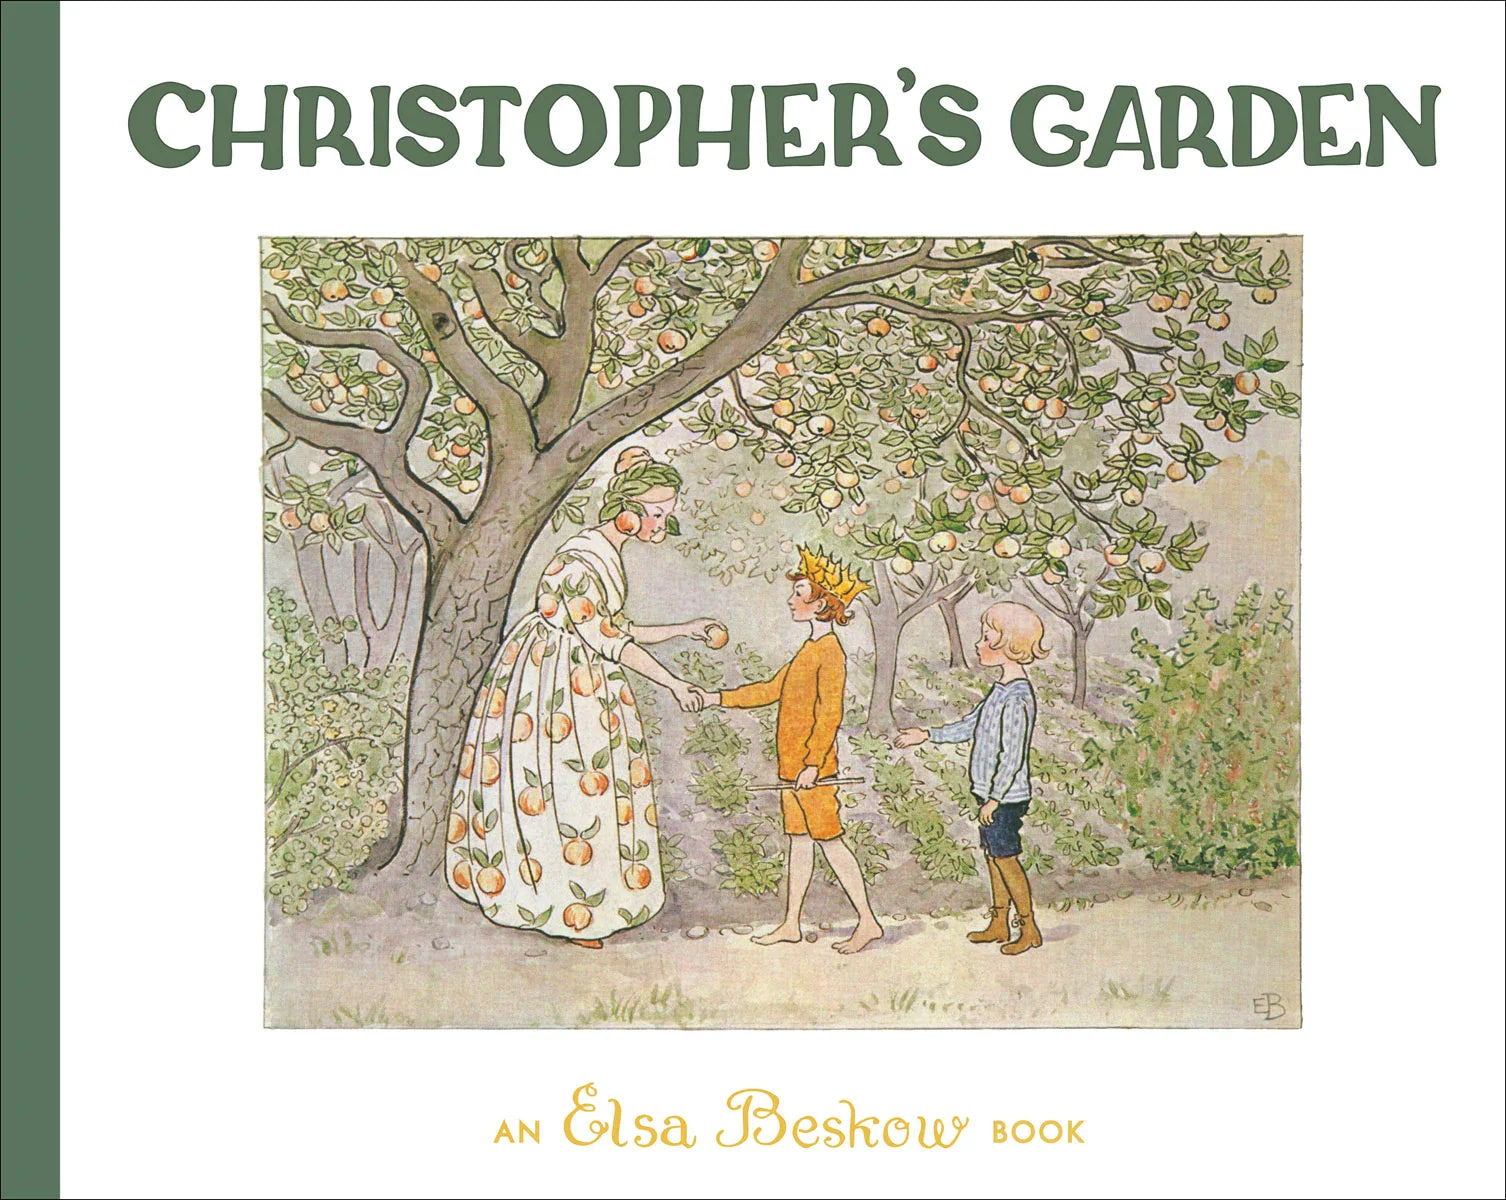 Christophers Garden by Elsa Beskow - Alder & Alouette